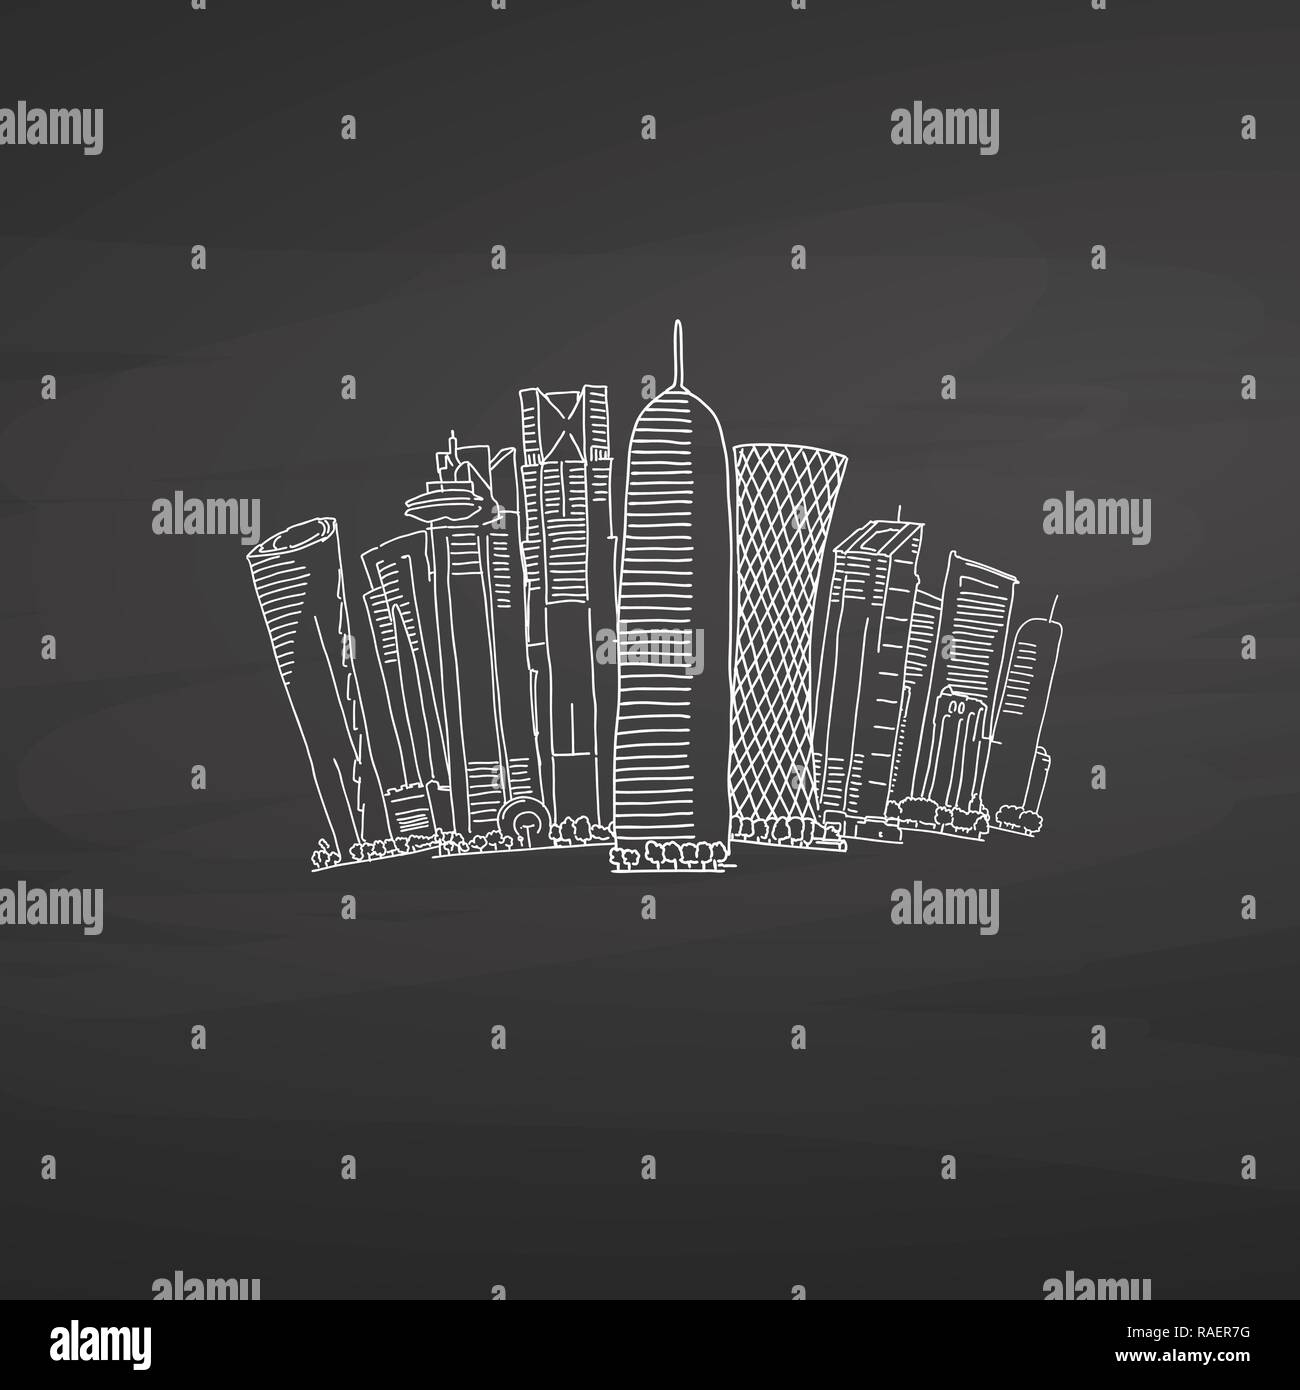 Doha Qatar Skyline on blackboard. Hand-drawn vector illustration. Famous travel destinations series. Stock Vector